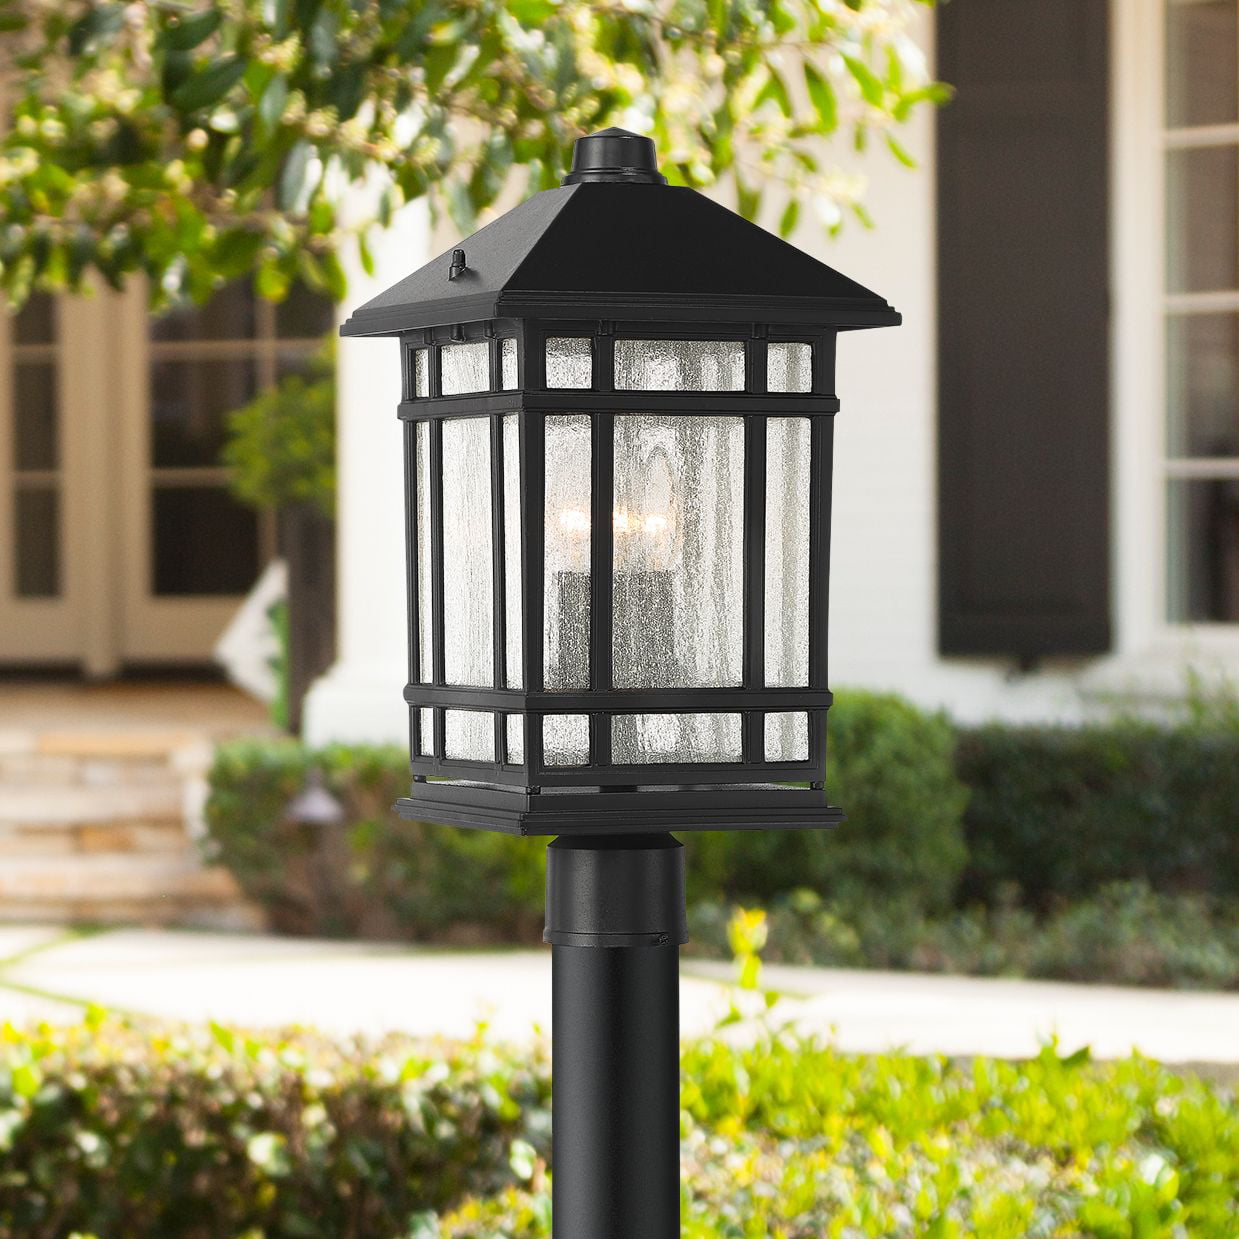 2-in-1 Solar Powered Light Lamp Post Lantern Yard Stake Outdoor Garden Lighting 